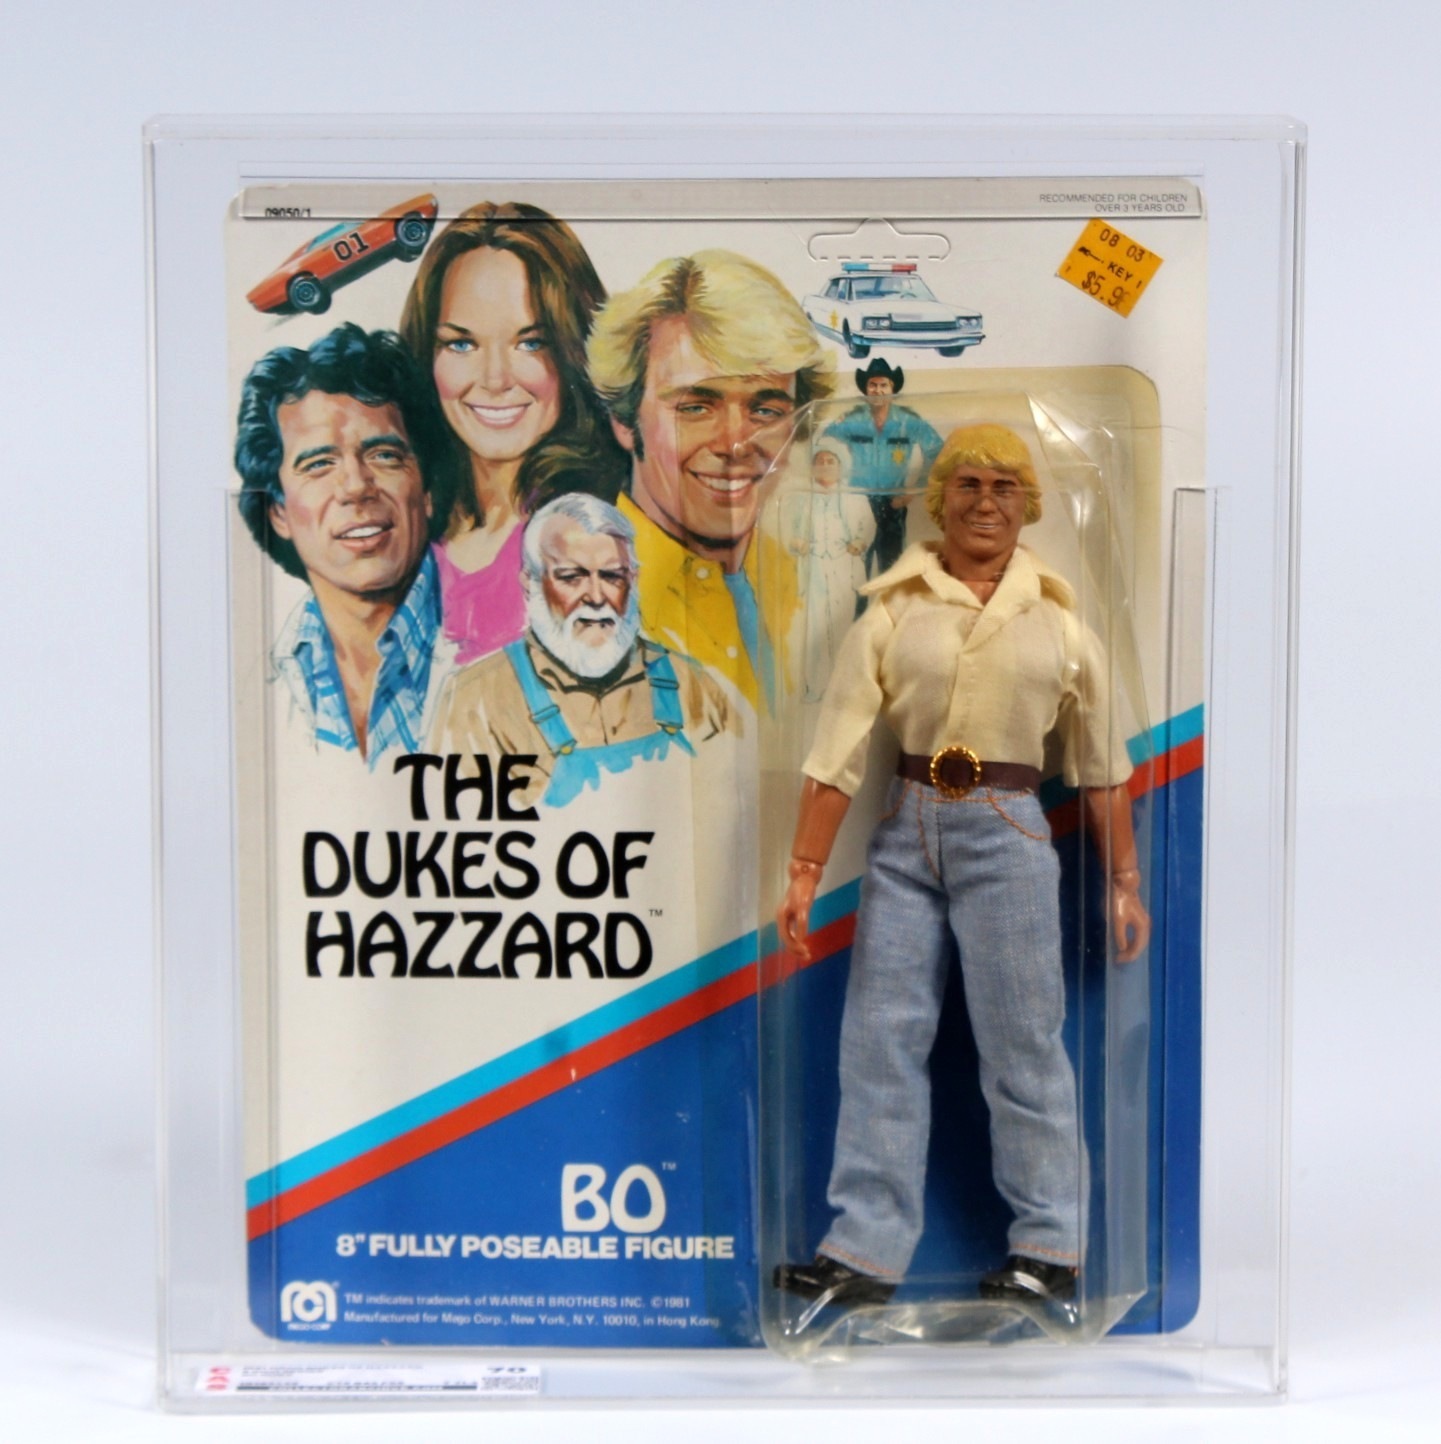 1981 Mego Dukes of Hazzard 8 Inch Carded Action Figure - Bo Duke